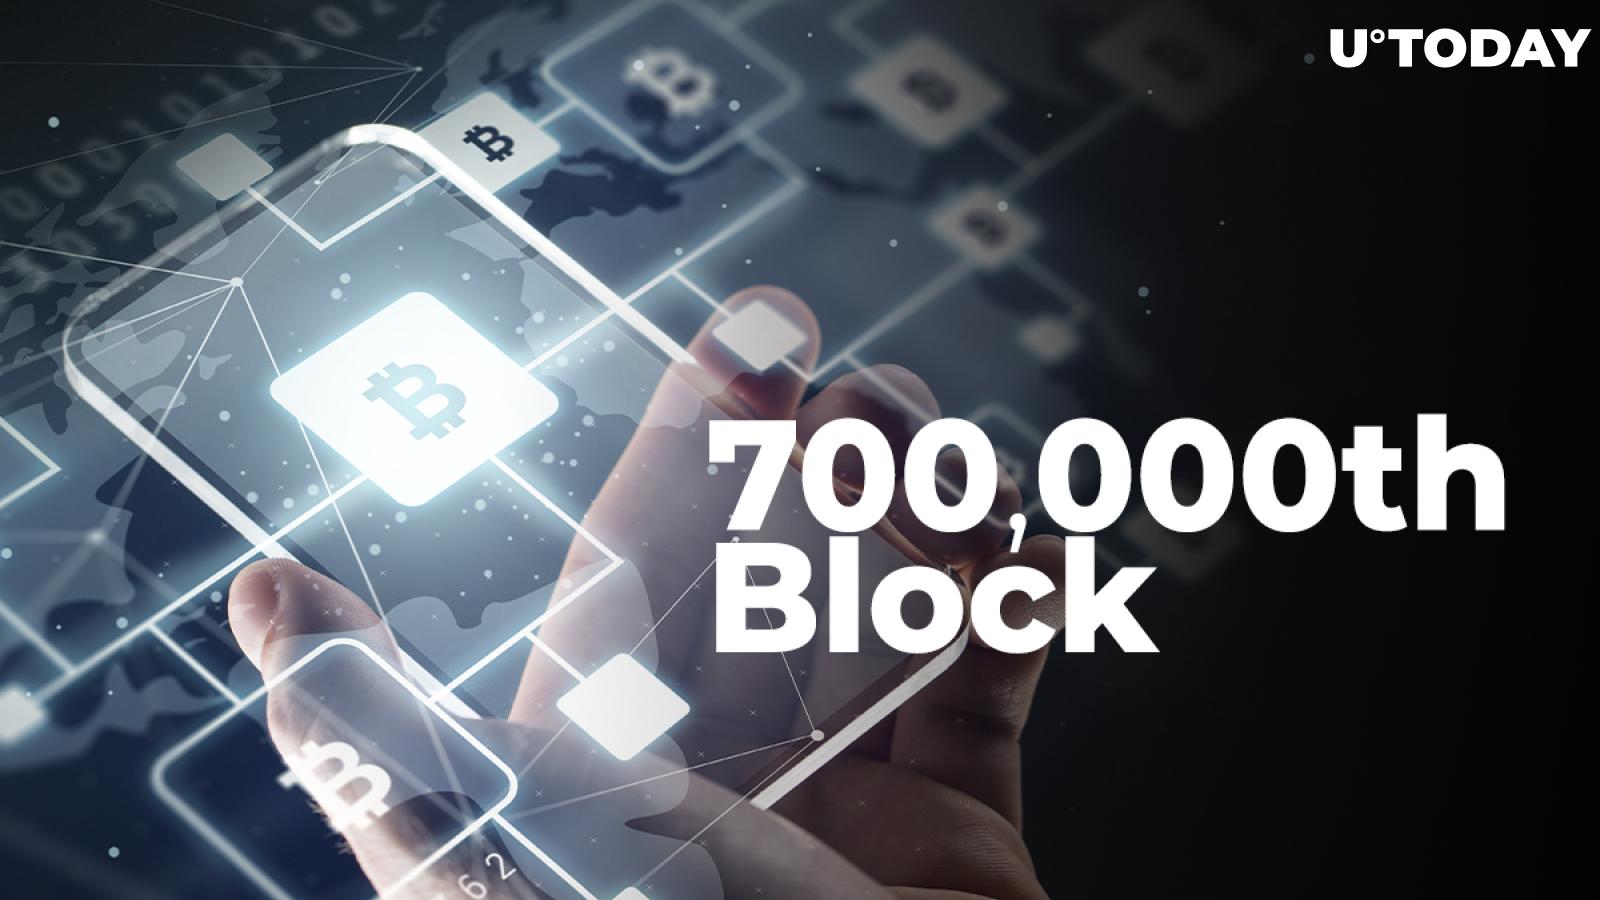 Bitcoin Achieves Major Milestone with 700,000th Block 